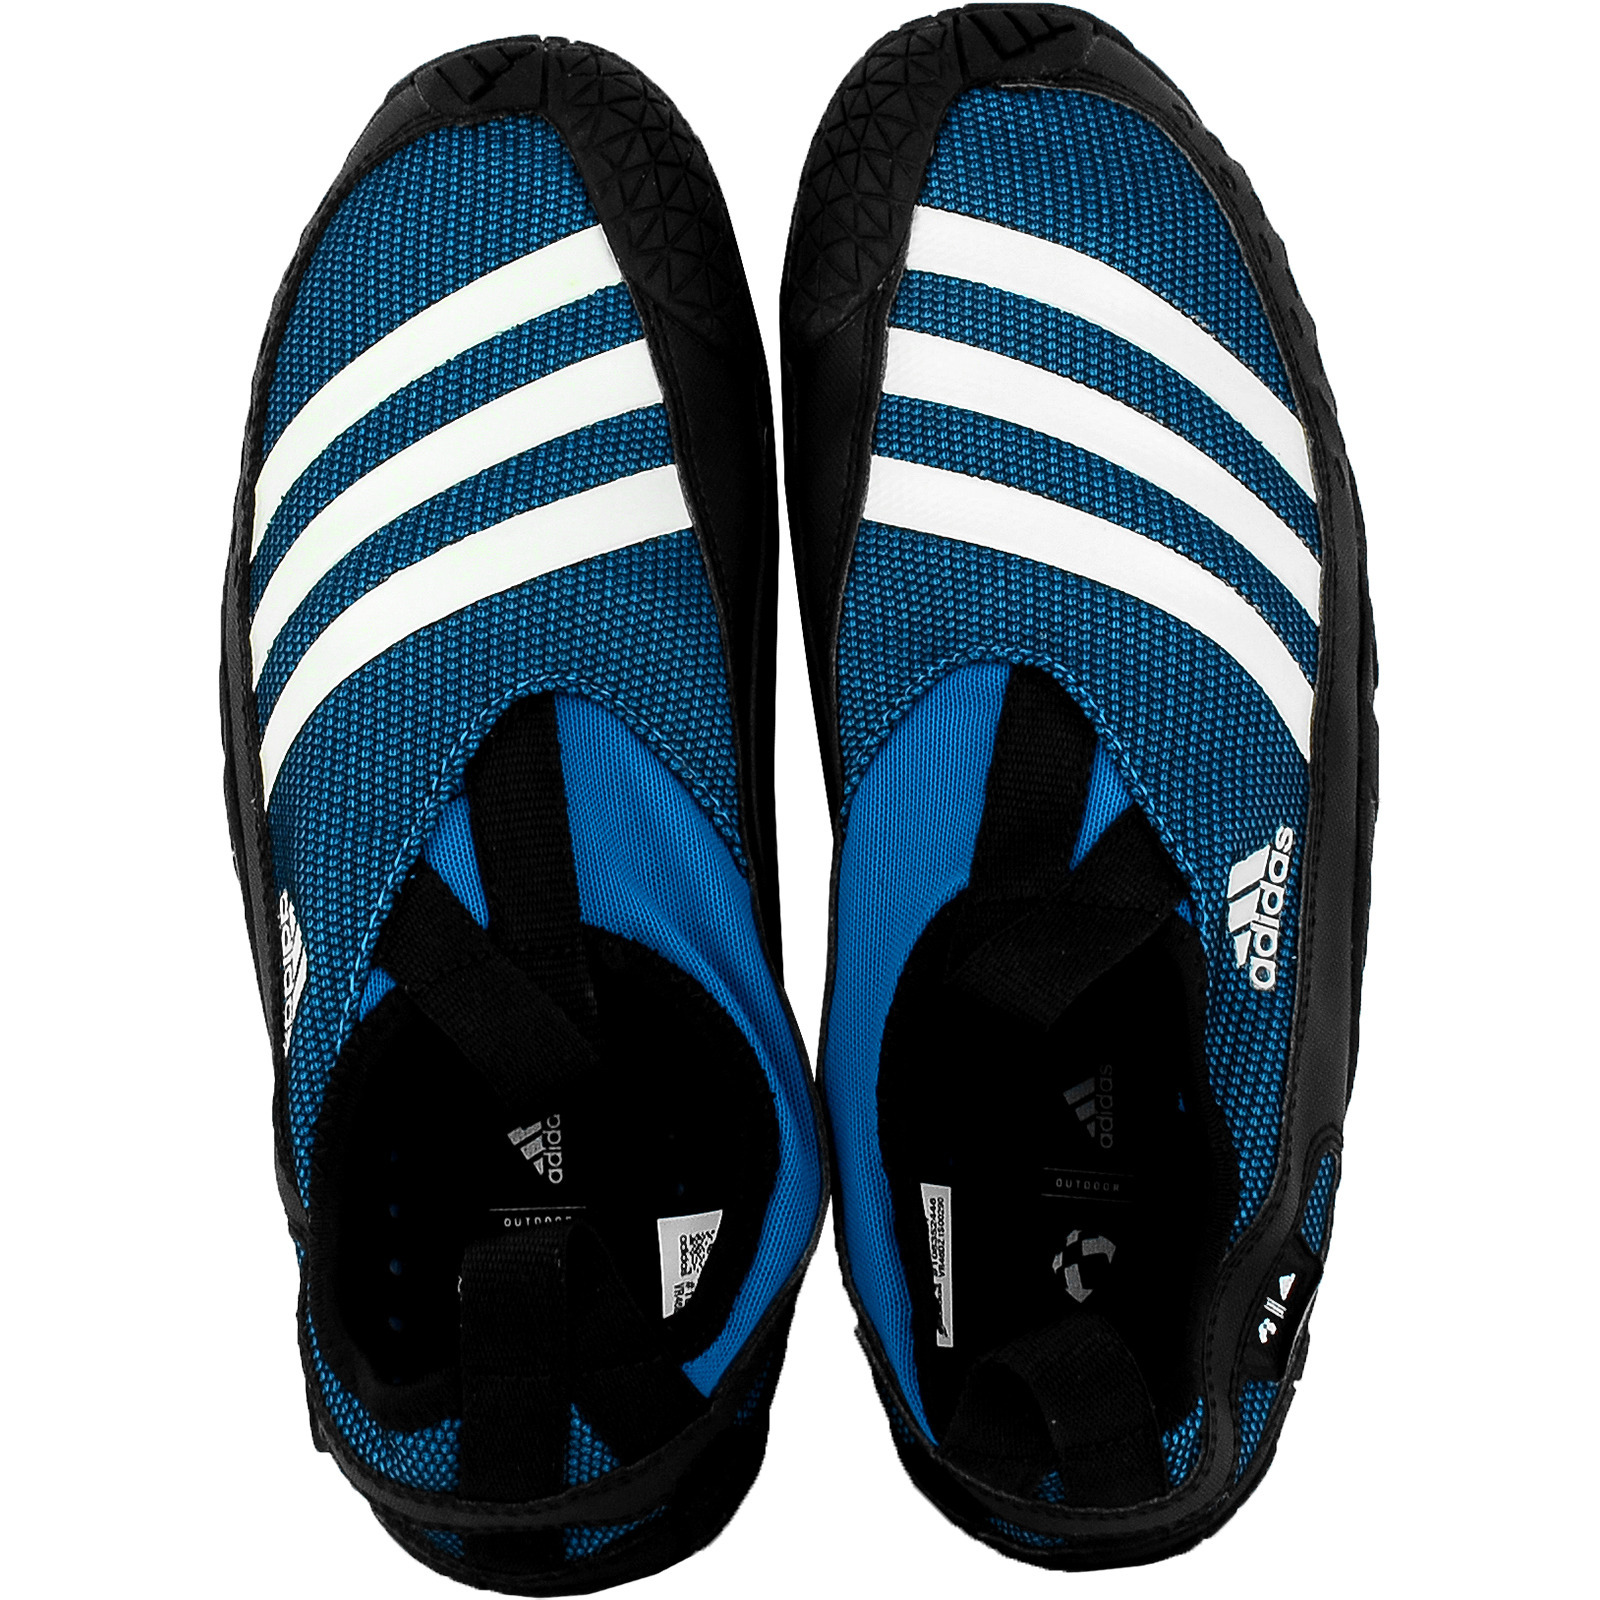 Pantofi sport, Adidasi Jawpaw II